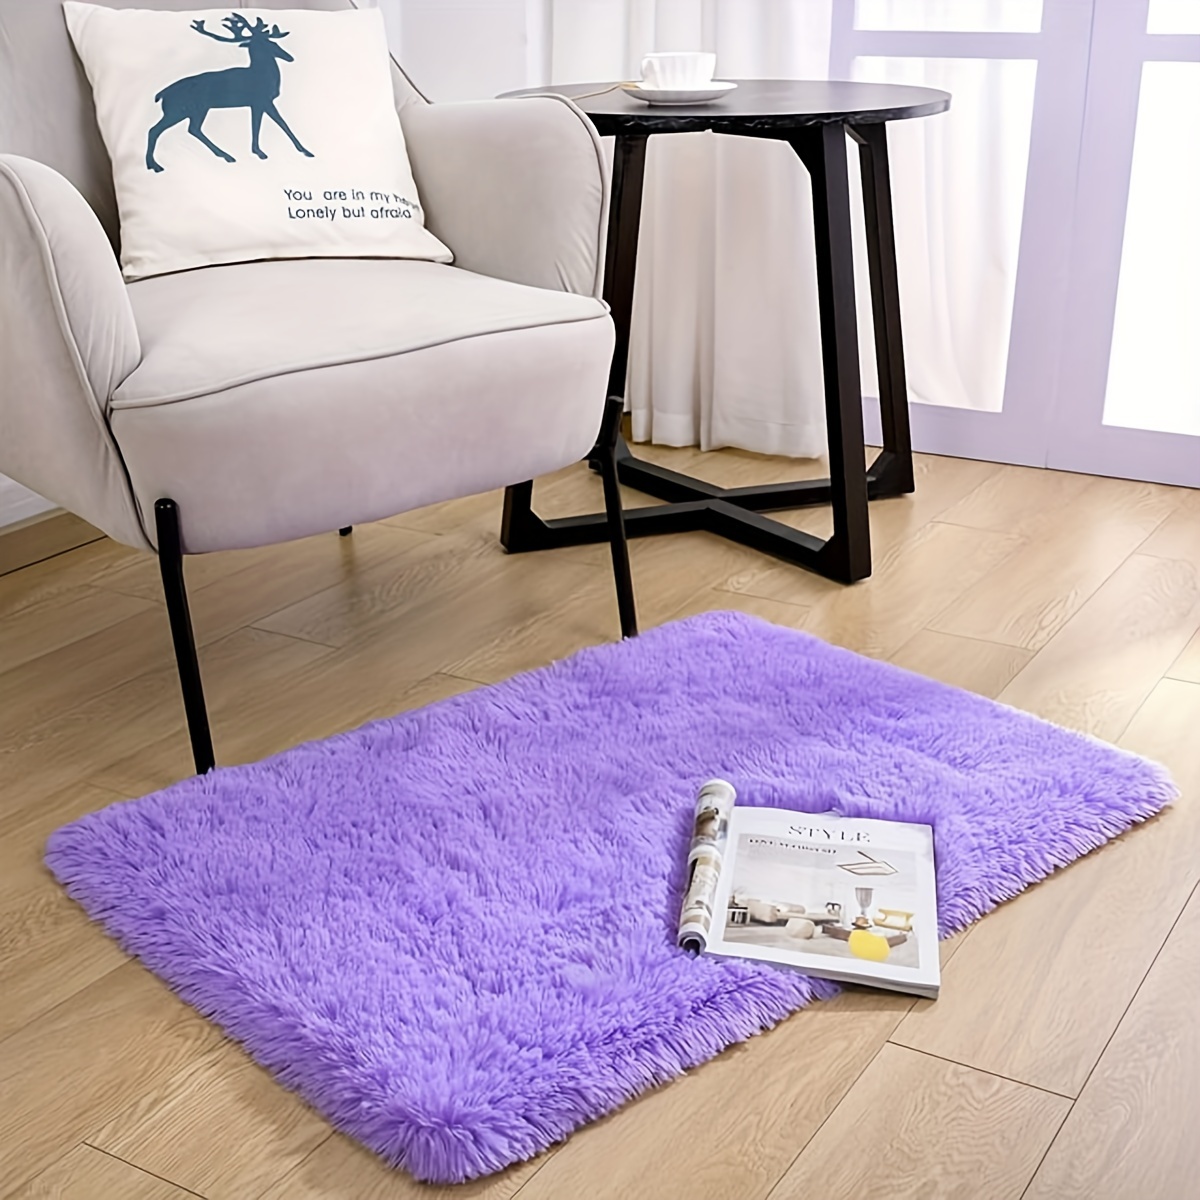 1pc purple shag indoor mat furry area rug non slip floor carpet home decor room decor home kitchen items gifts farmhouse decor